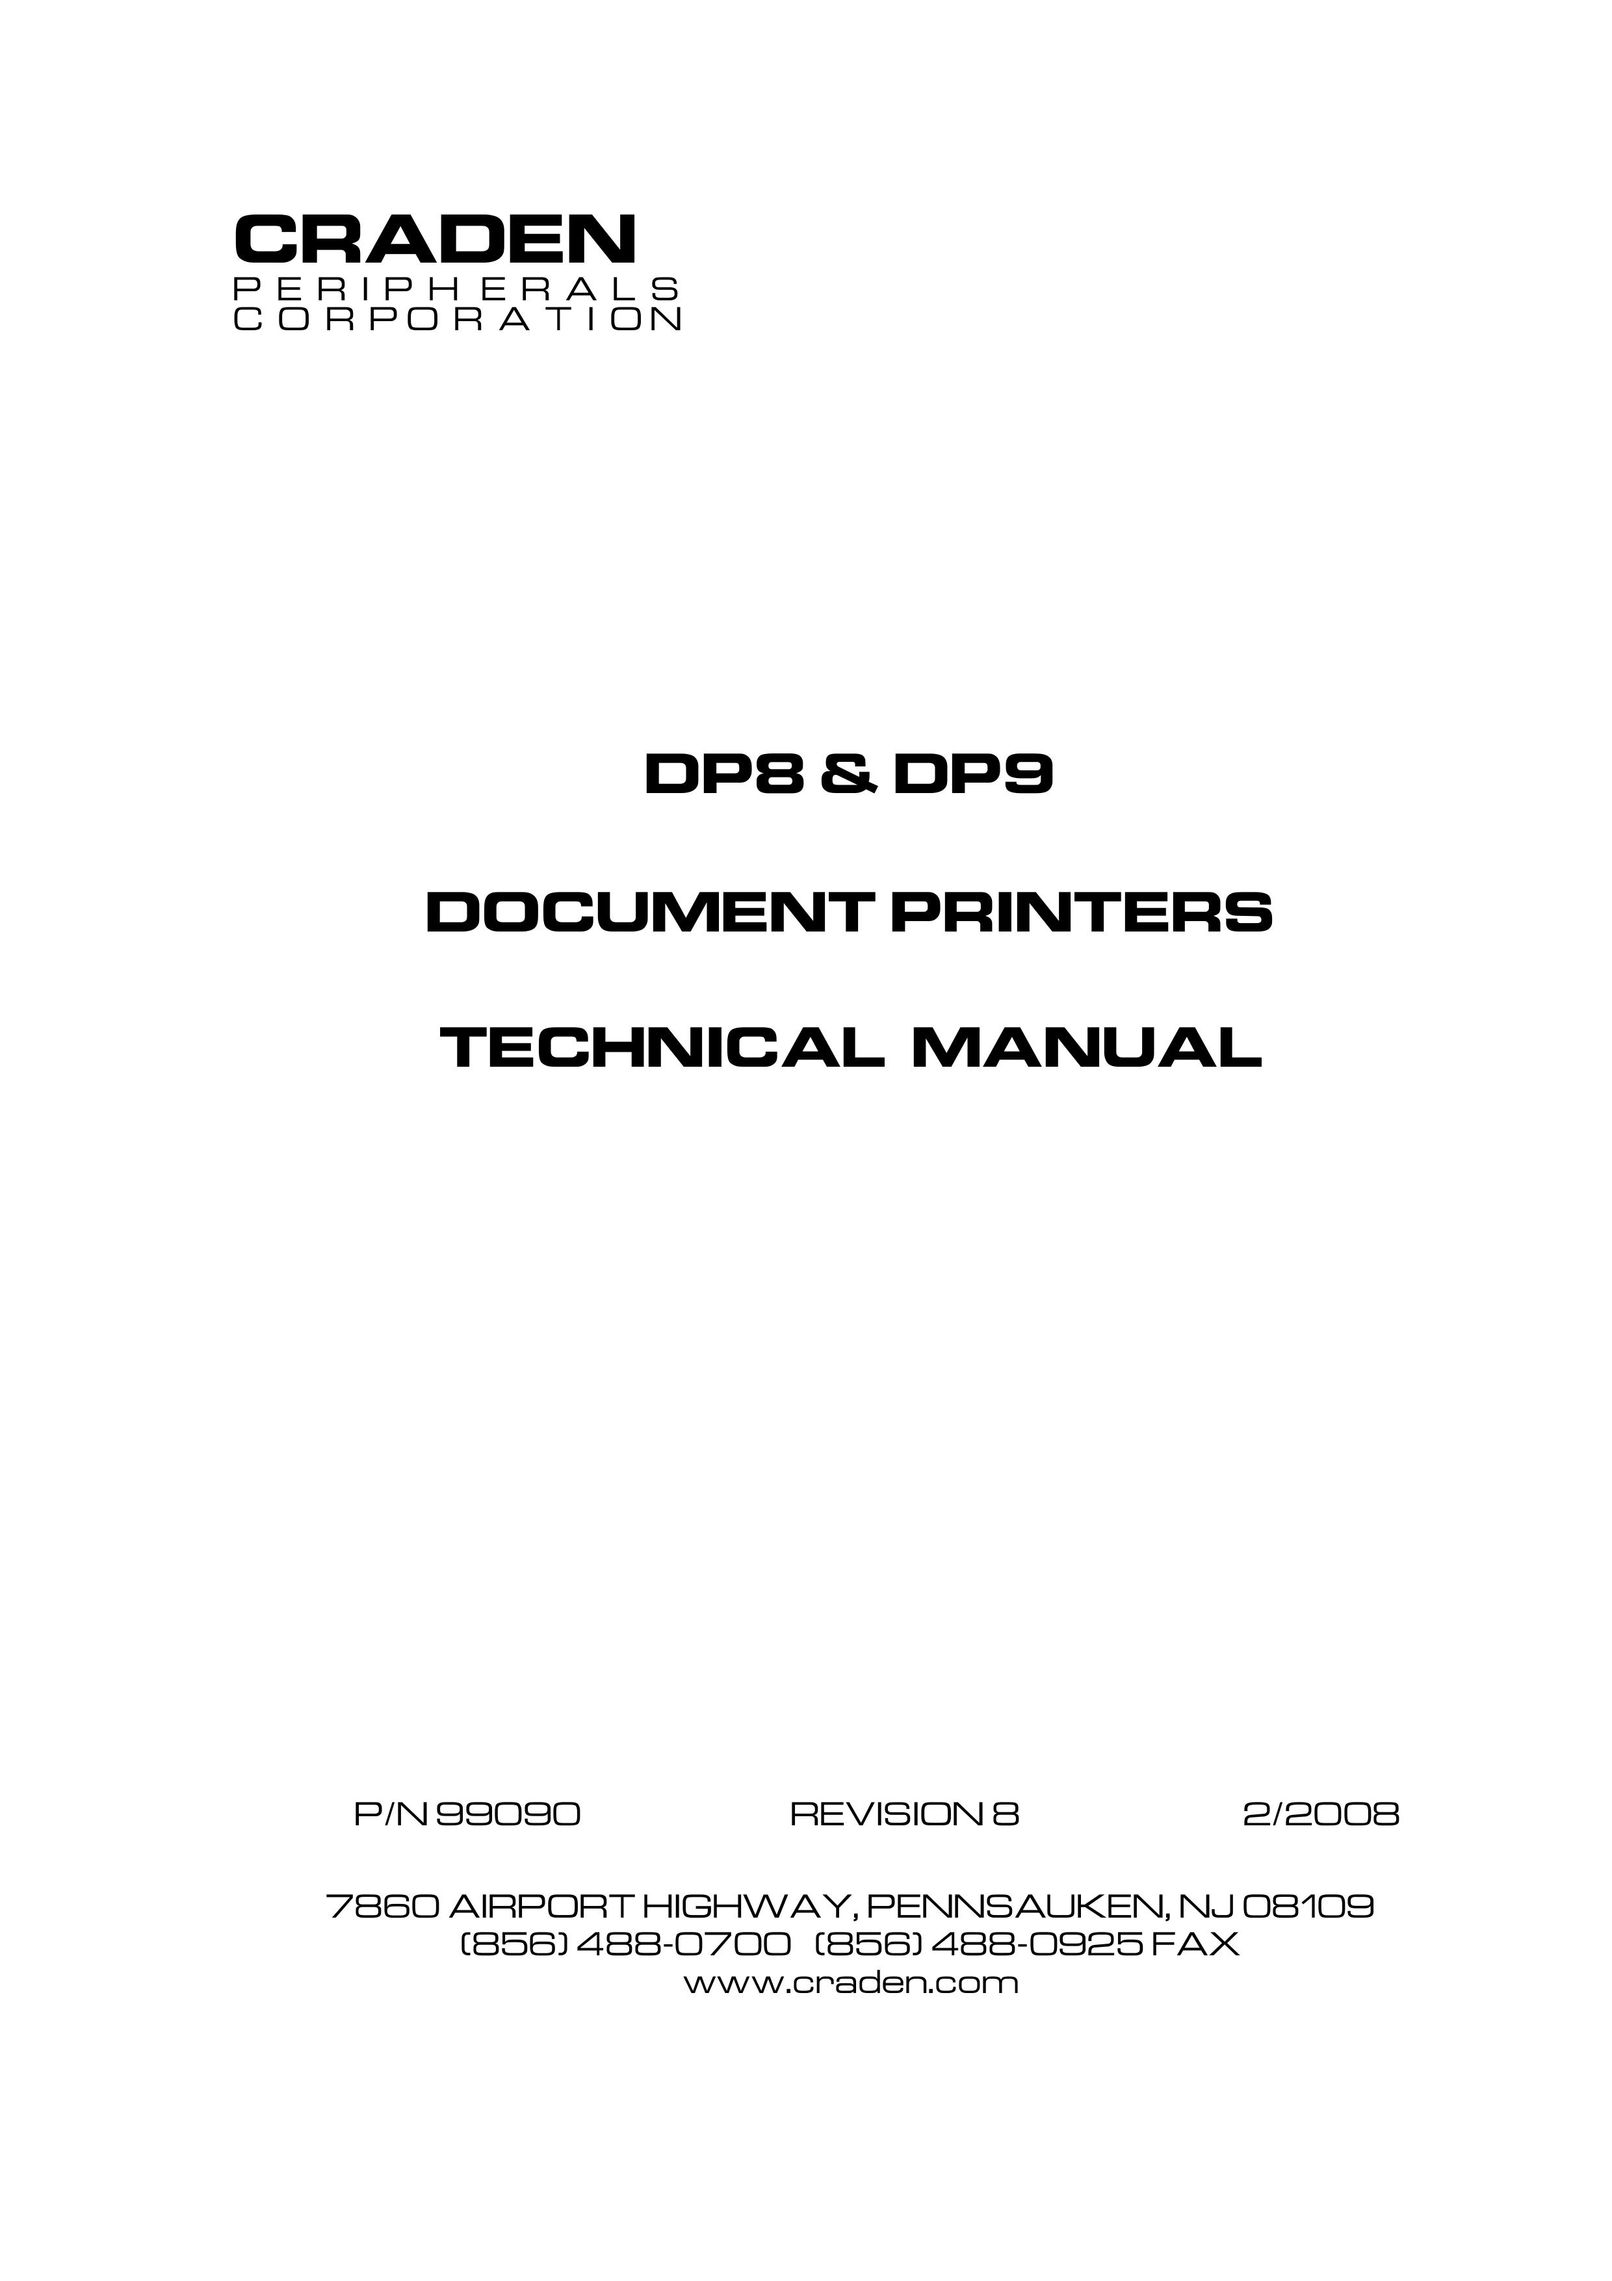 Craden Peripherals DP9 Printer User Manual